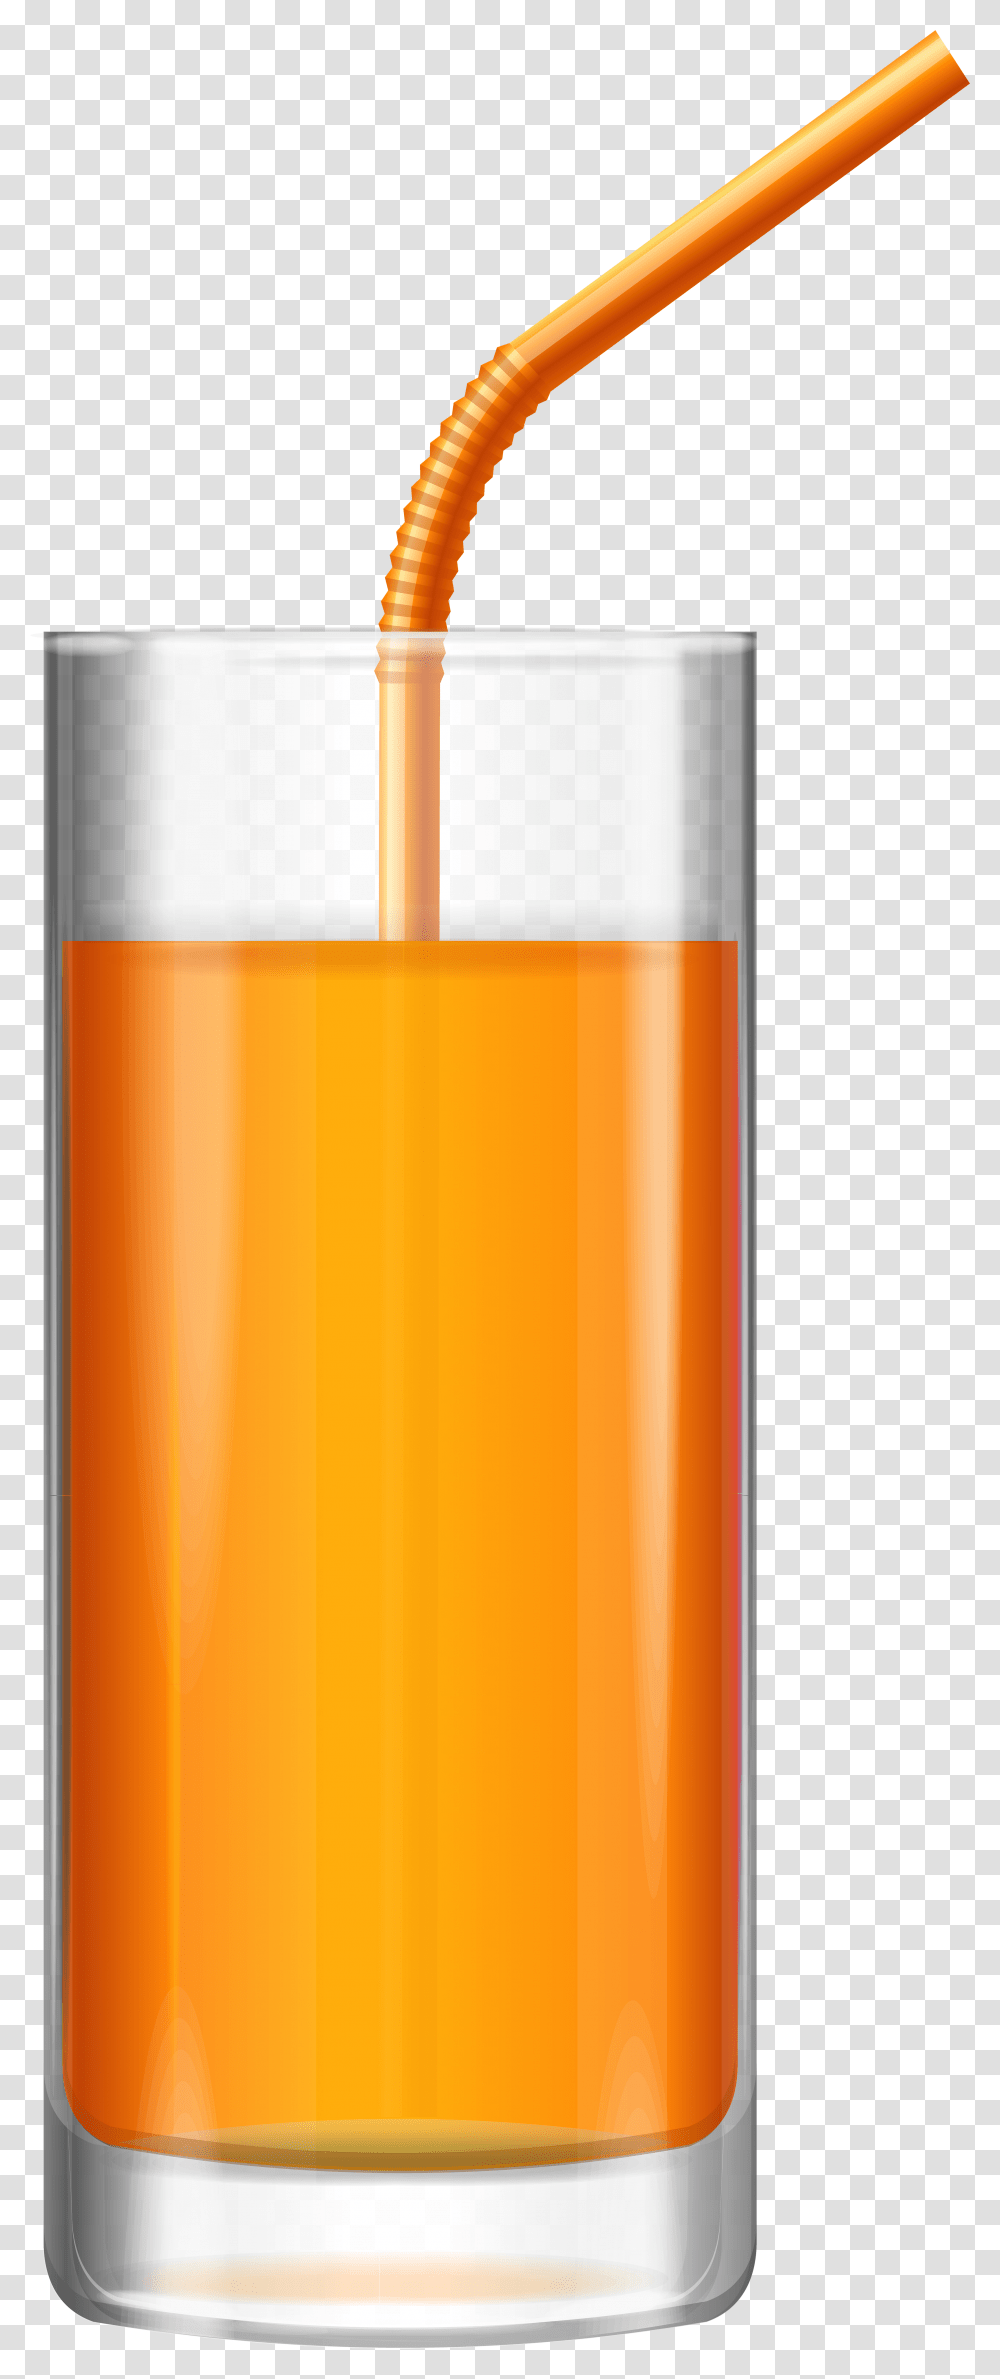 Orange Juice Clip Art Image Gallery Yopriceville High Juice Clipart, Beverage, Drink, Glass, Alcohol Transparent Png